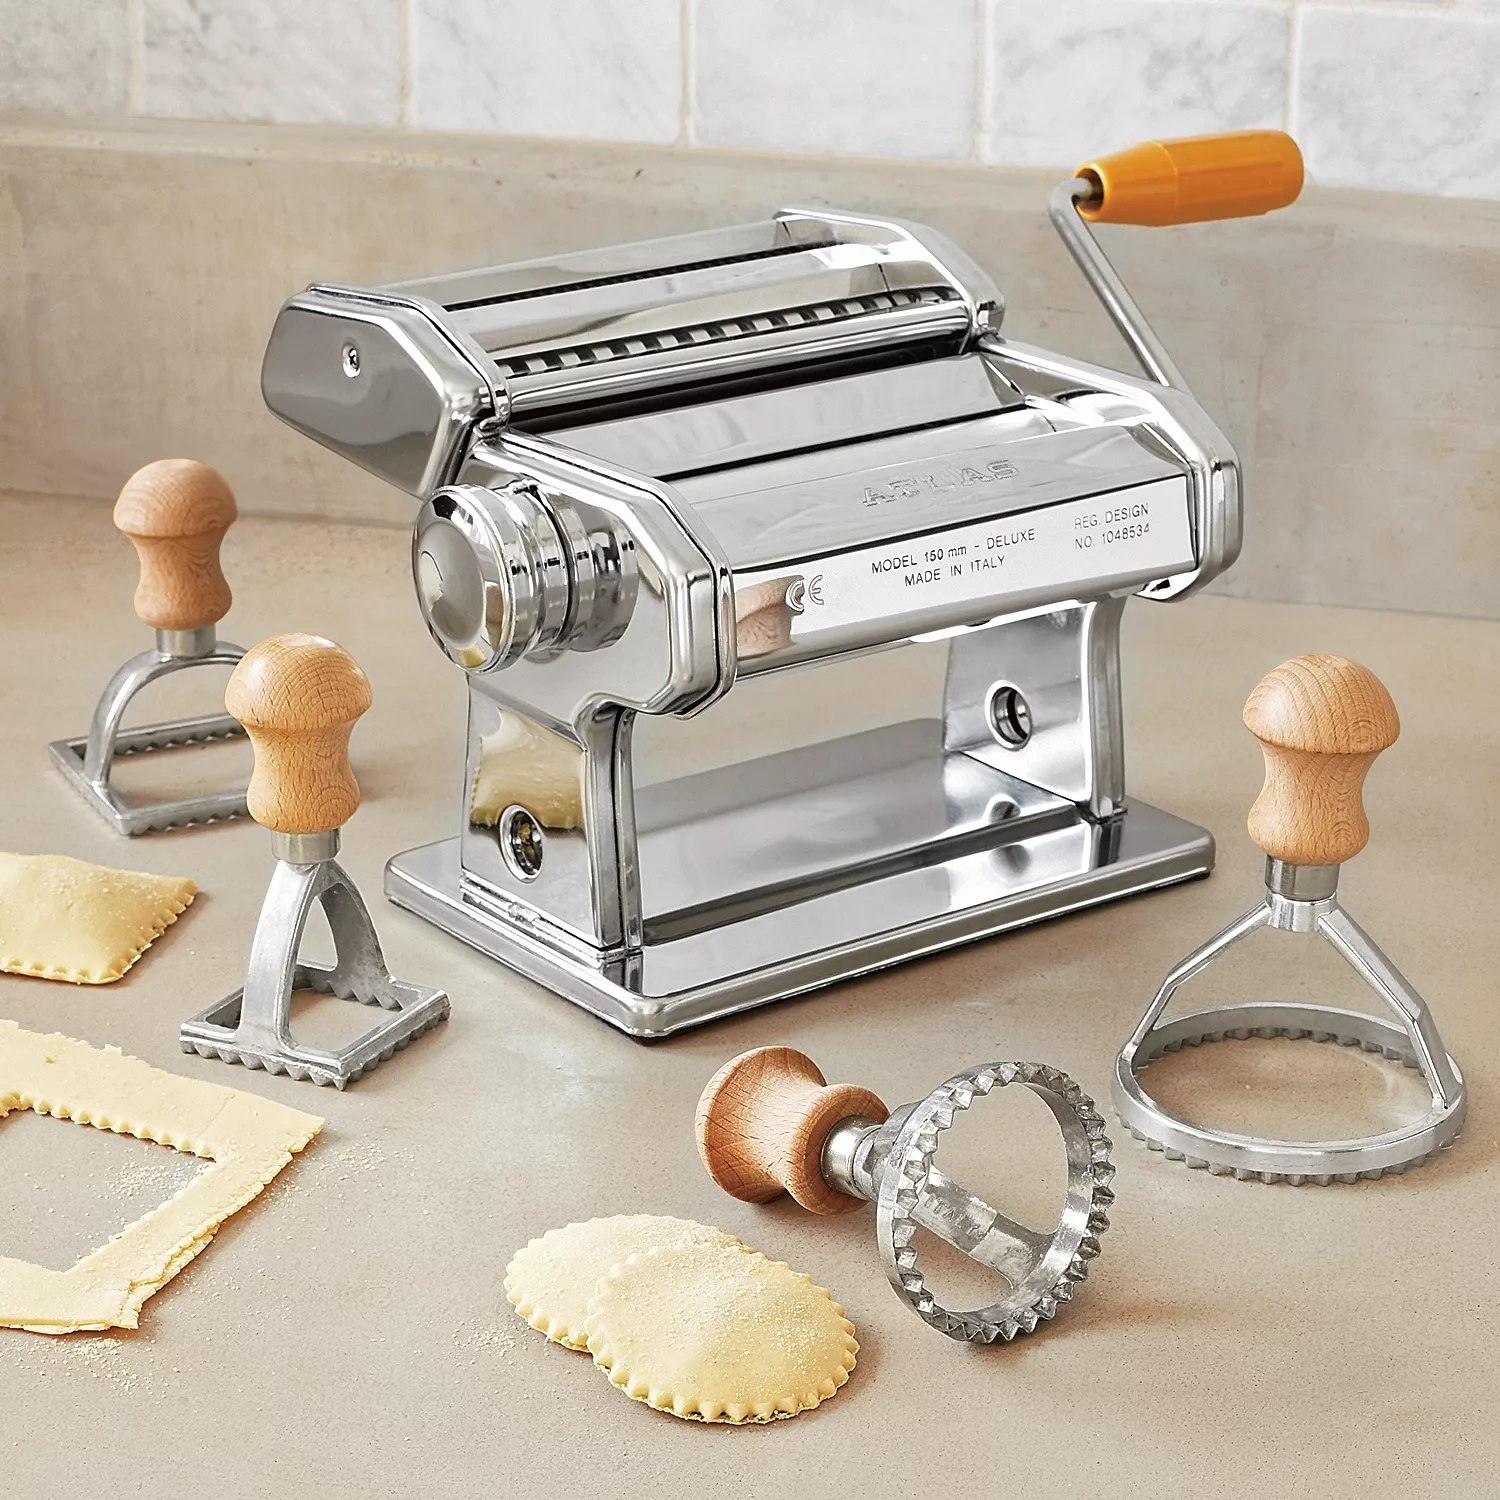 Accessories for ravioli - Imperia pasta machines, Other